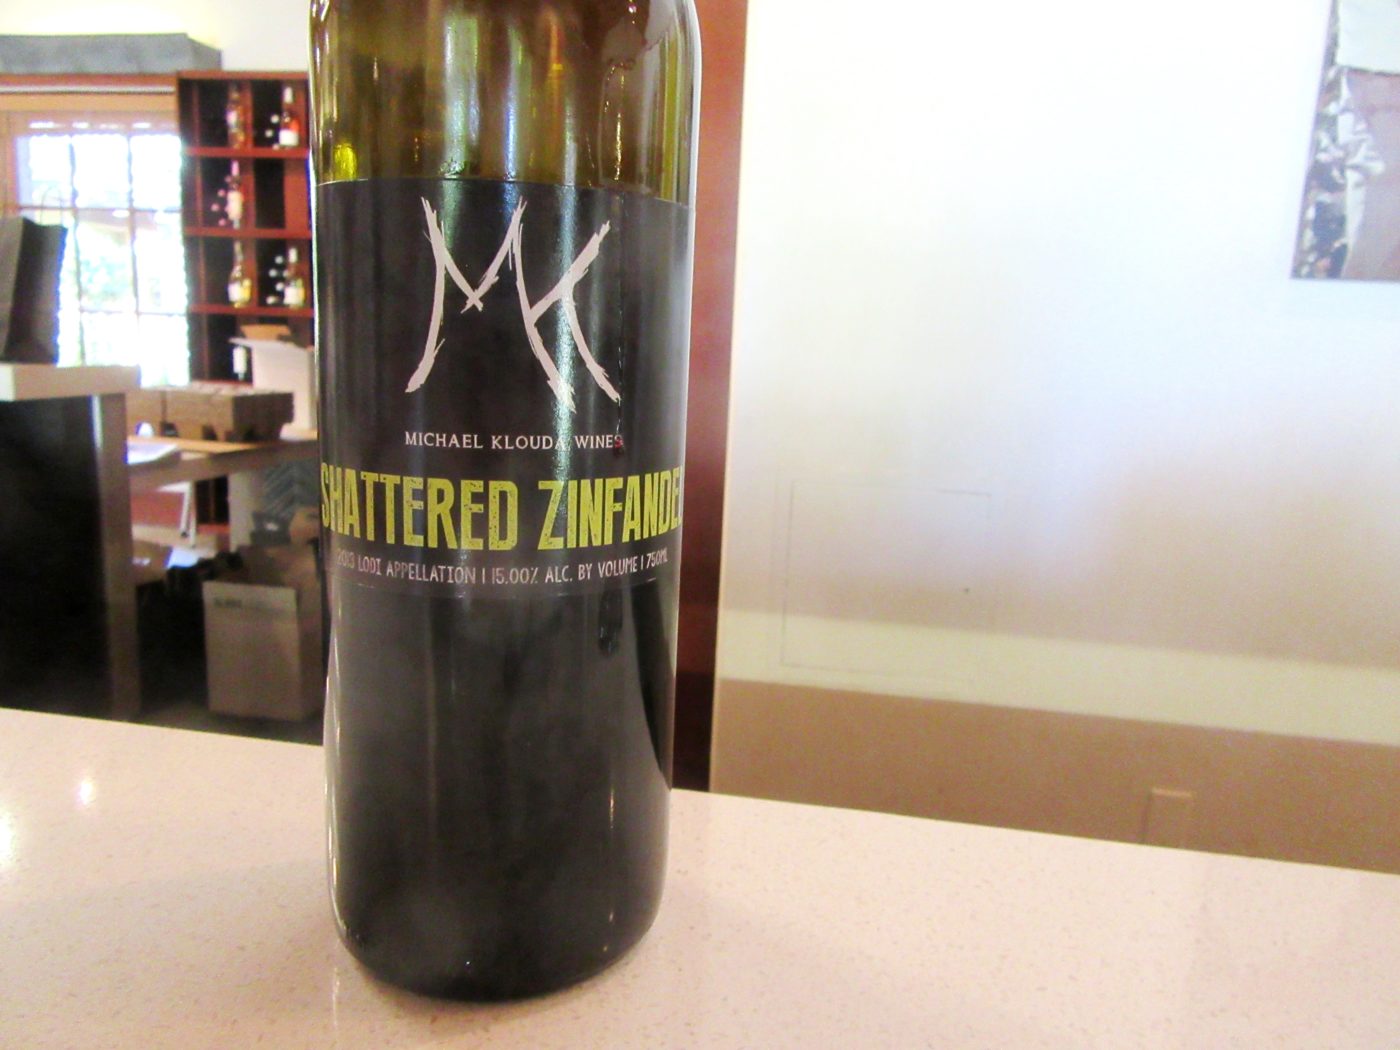 Michael Klouda Wines, Shattered Zinfandel 2013, Lodi, California, Wine Casual